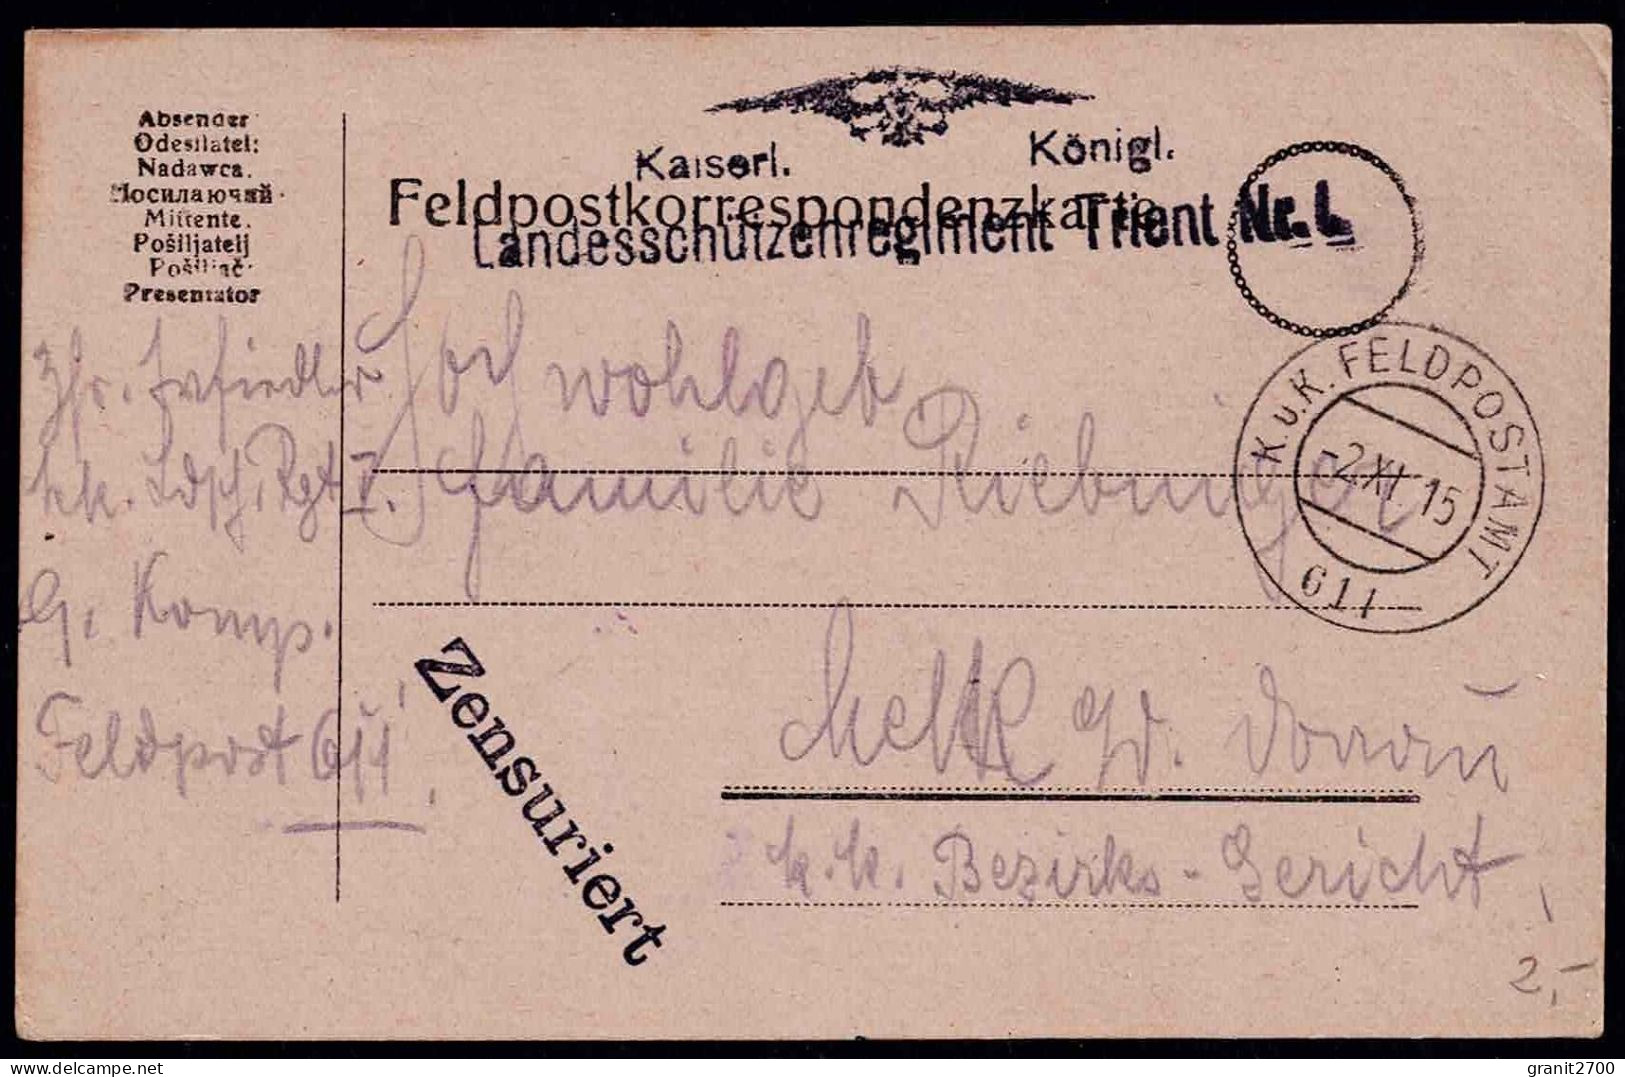 Feldpostkorrespondenzkarte - Kaiserl. Königl. Landesschützenregiment Trient Nr. 1 - Zensuriert - Feldpostamt 611 - Covers & Documents